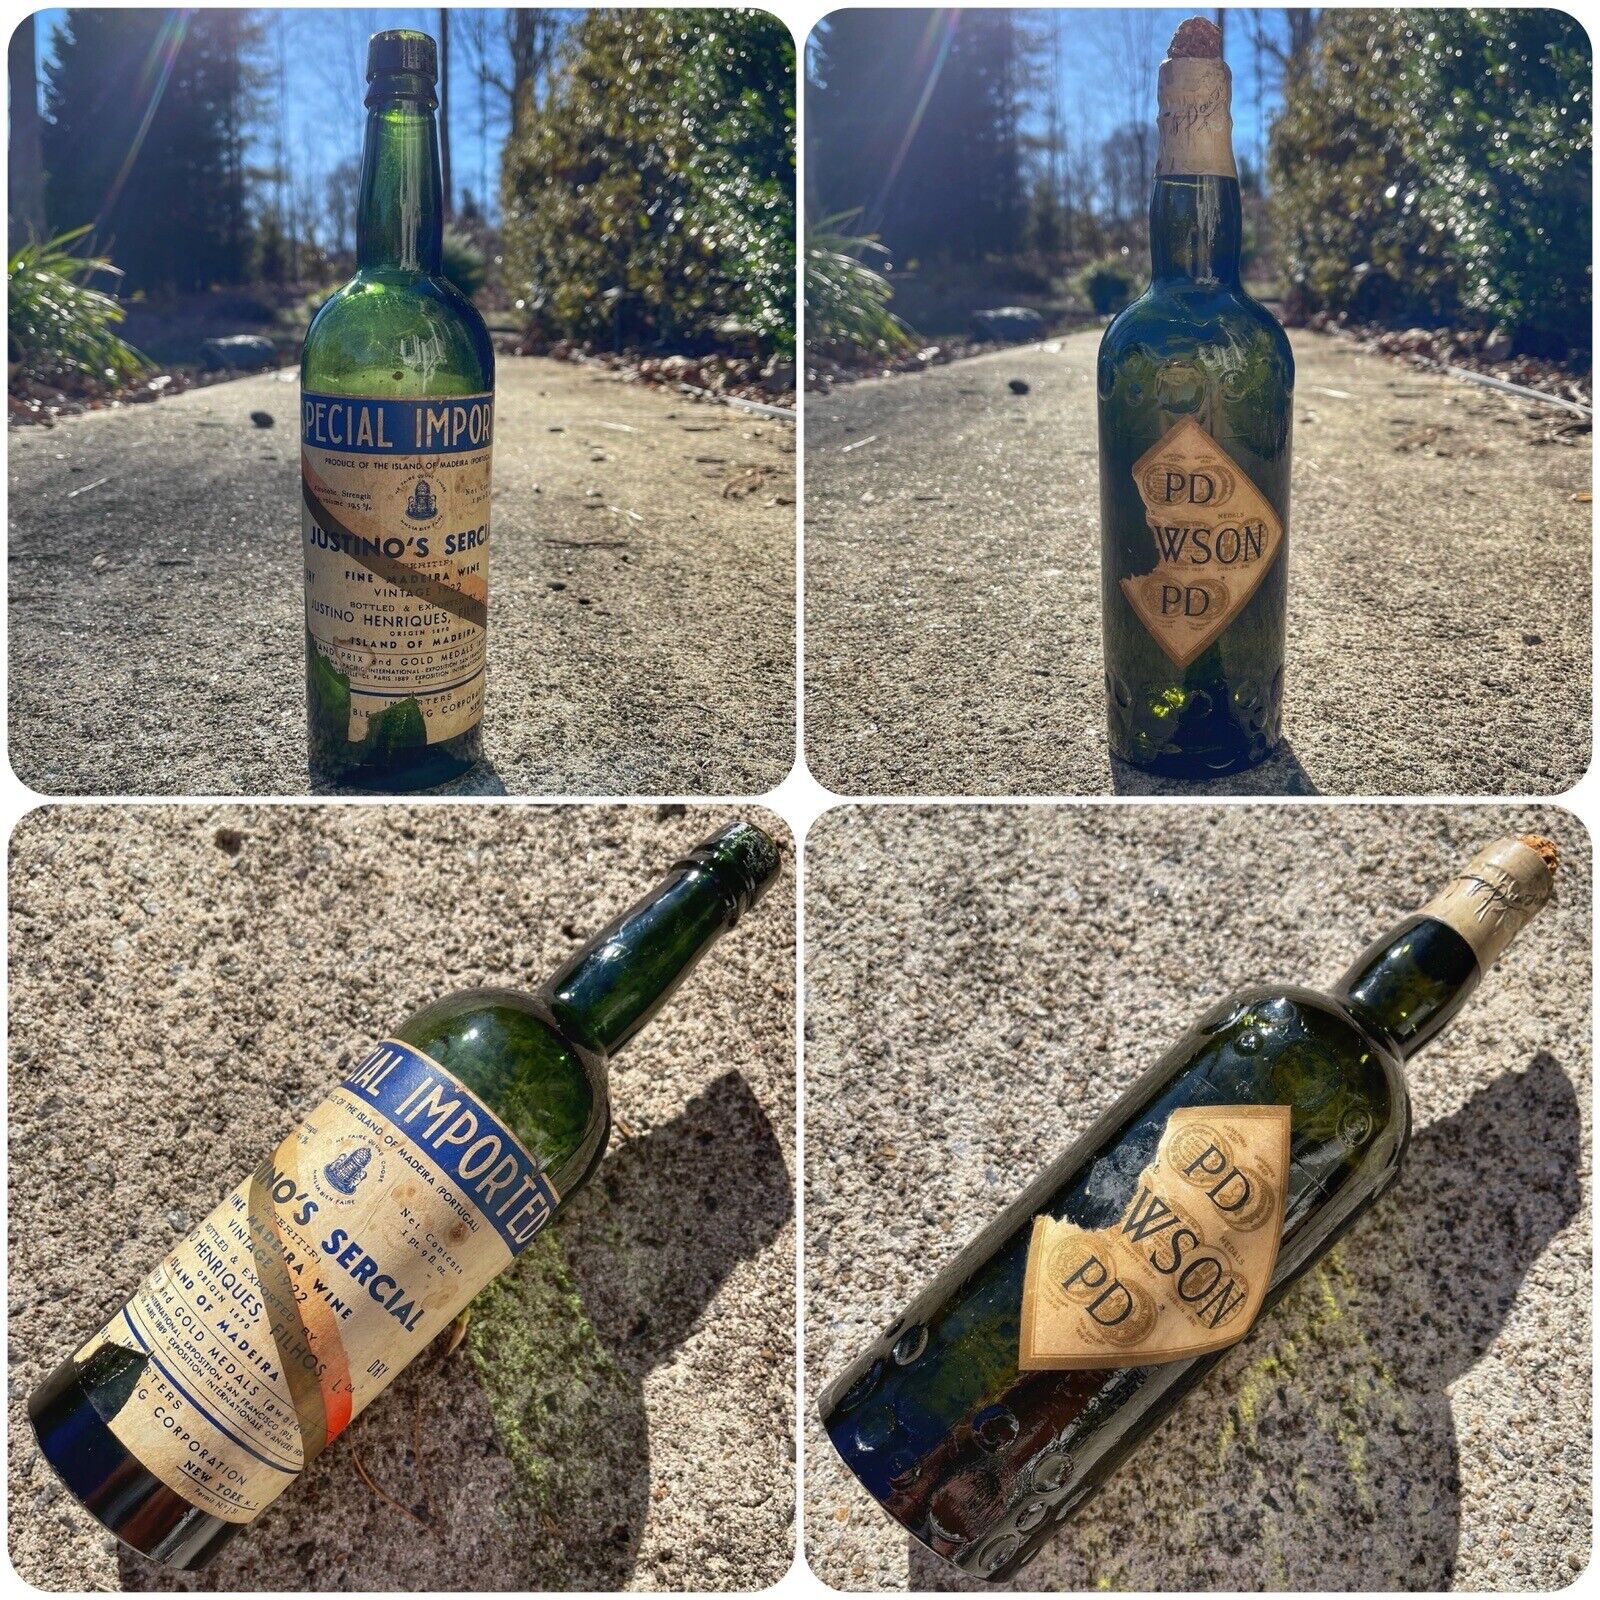 Antique 1922 Peter PD Dawson Scotch Whisky & Justino’s Green Fine Wine Bottles